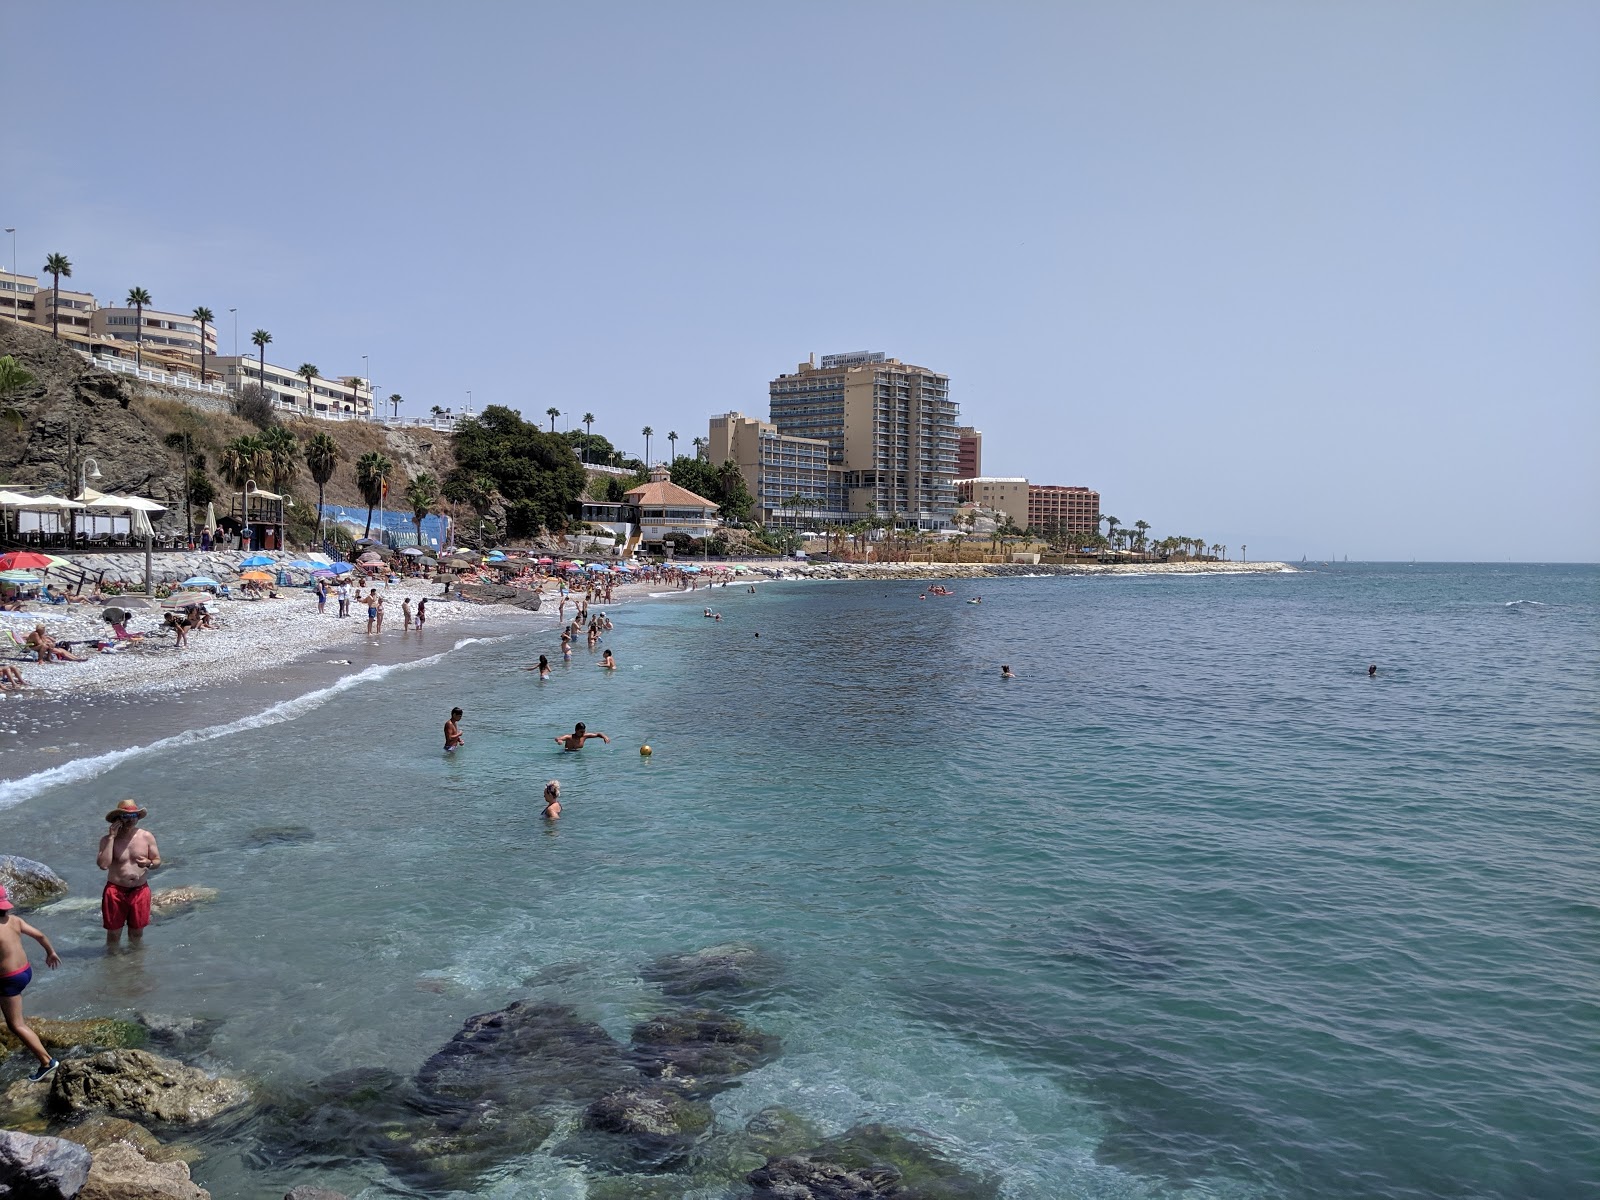 Foto di Playa Torrevigia con una superficie del sabbia grigia